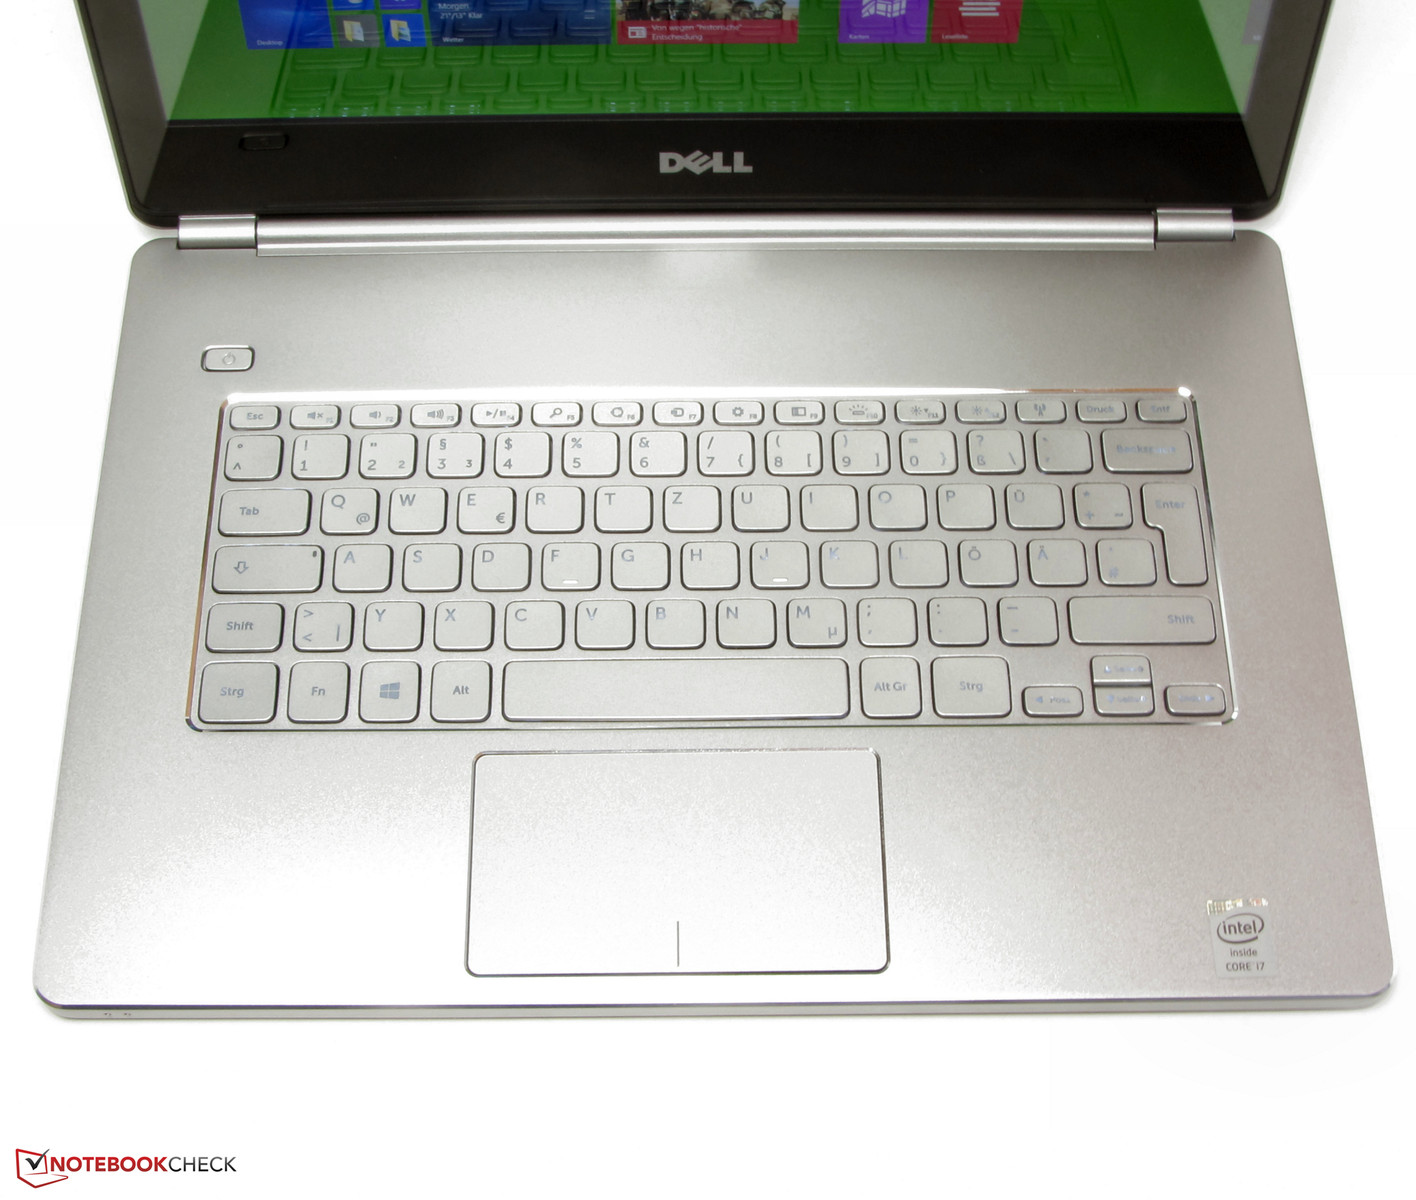 Dell Inspiron 14-7437 FHD Ultrabook Review Update - NotebookCheck 